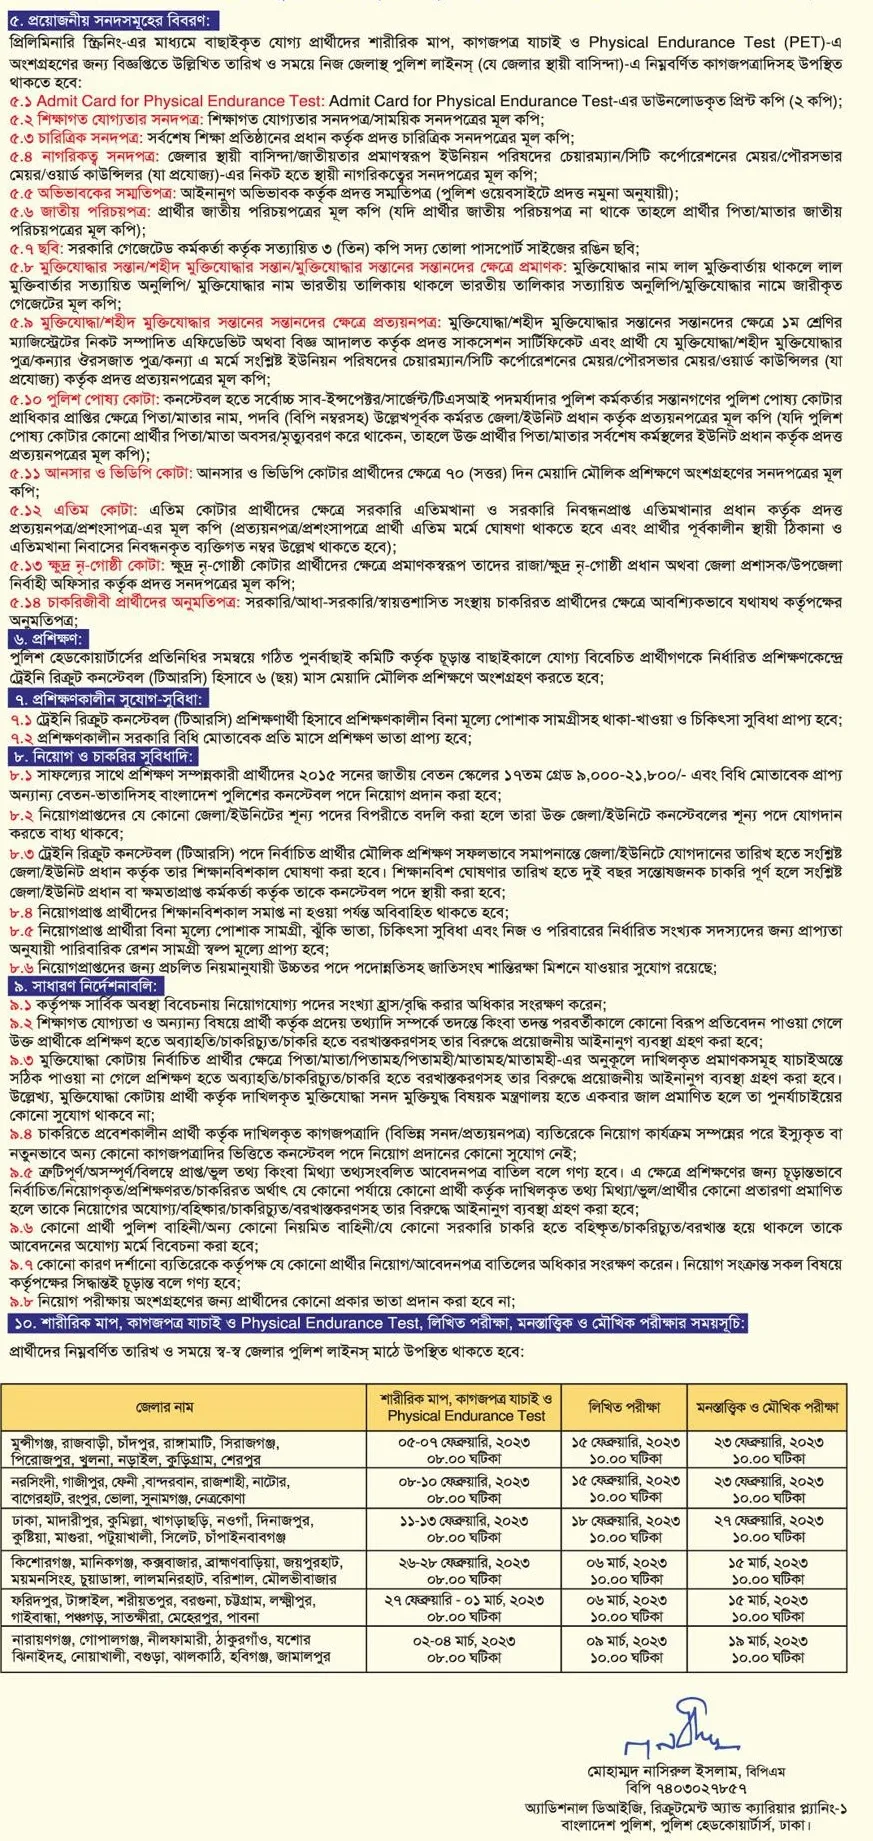 Police Recruitment Circular 2022 (Constable Recruitment 2023) - Bangladesh Police Constable Recruitment 2023 - Latest Police Recruitment Circular - New Police Constable Job Circular - NeotericIT.com